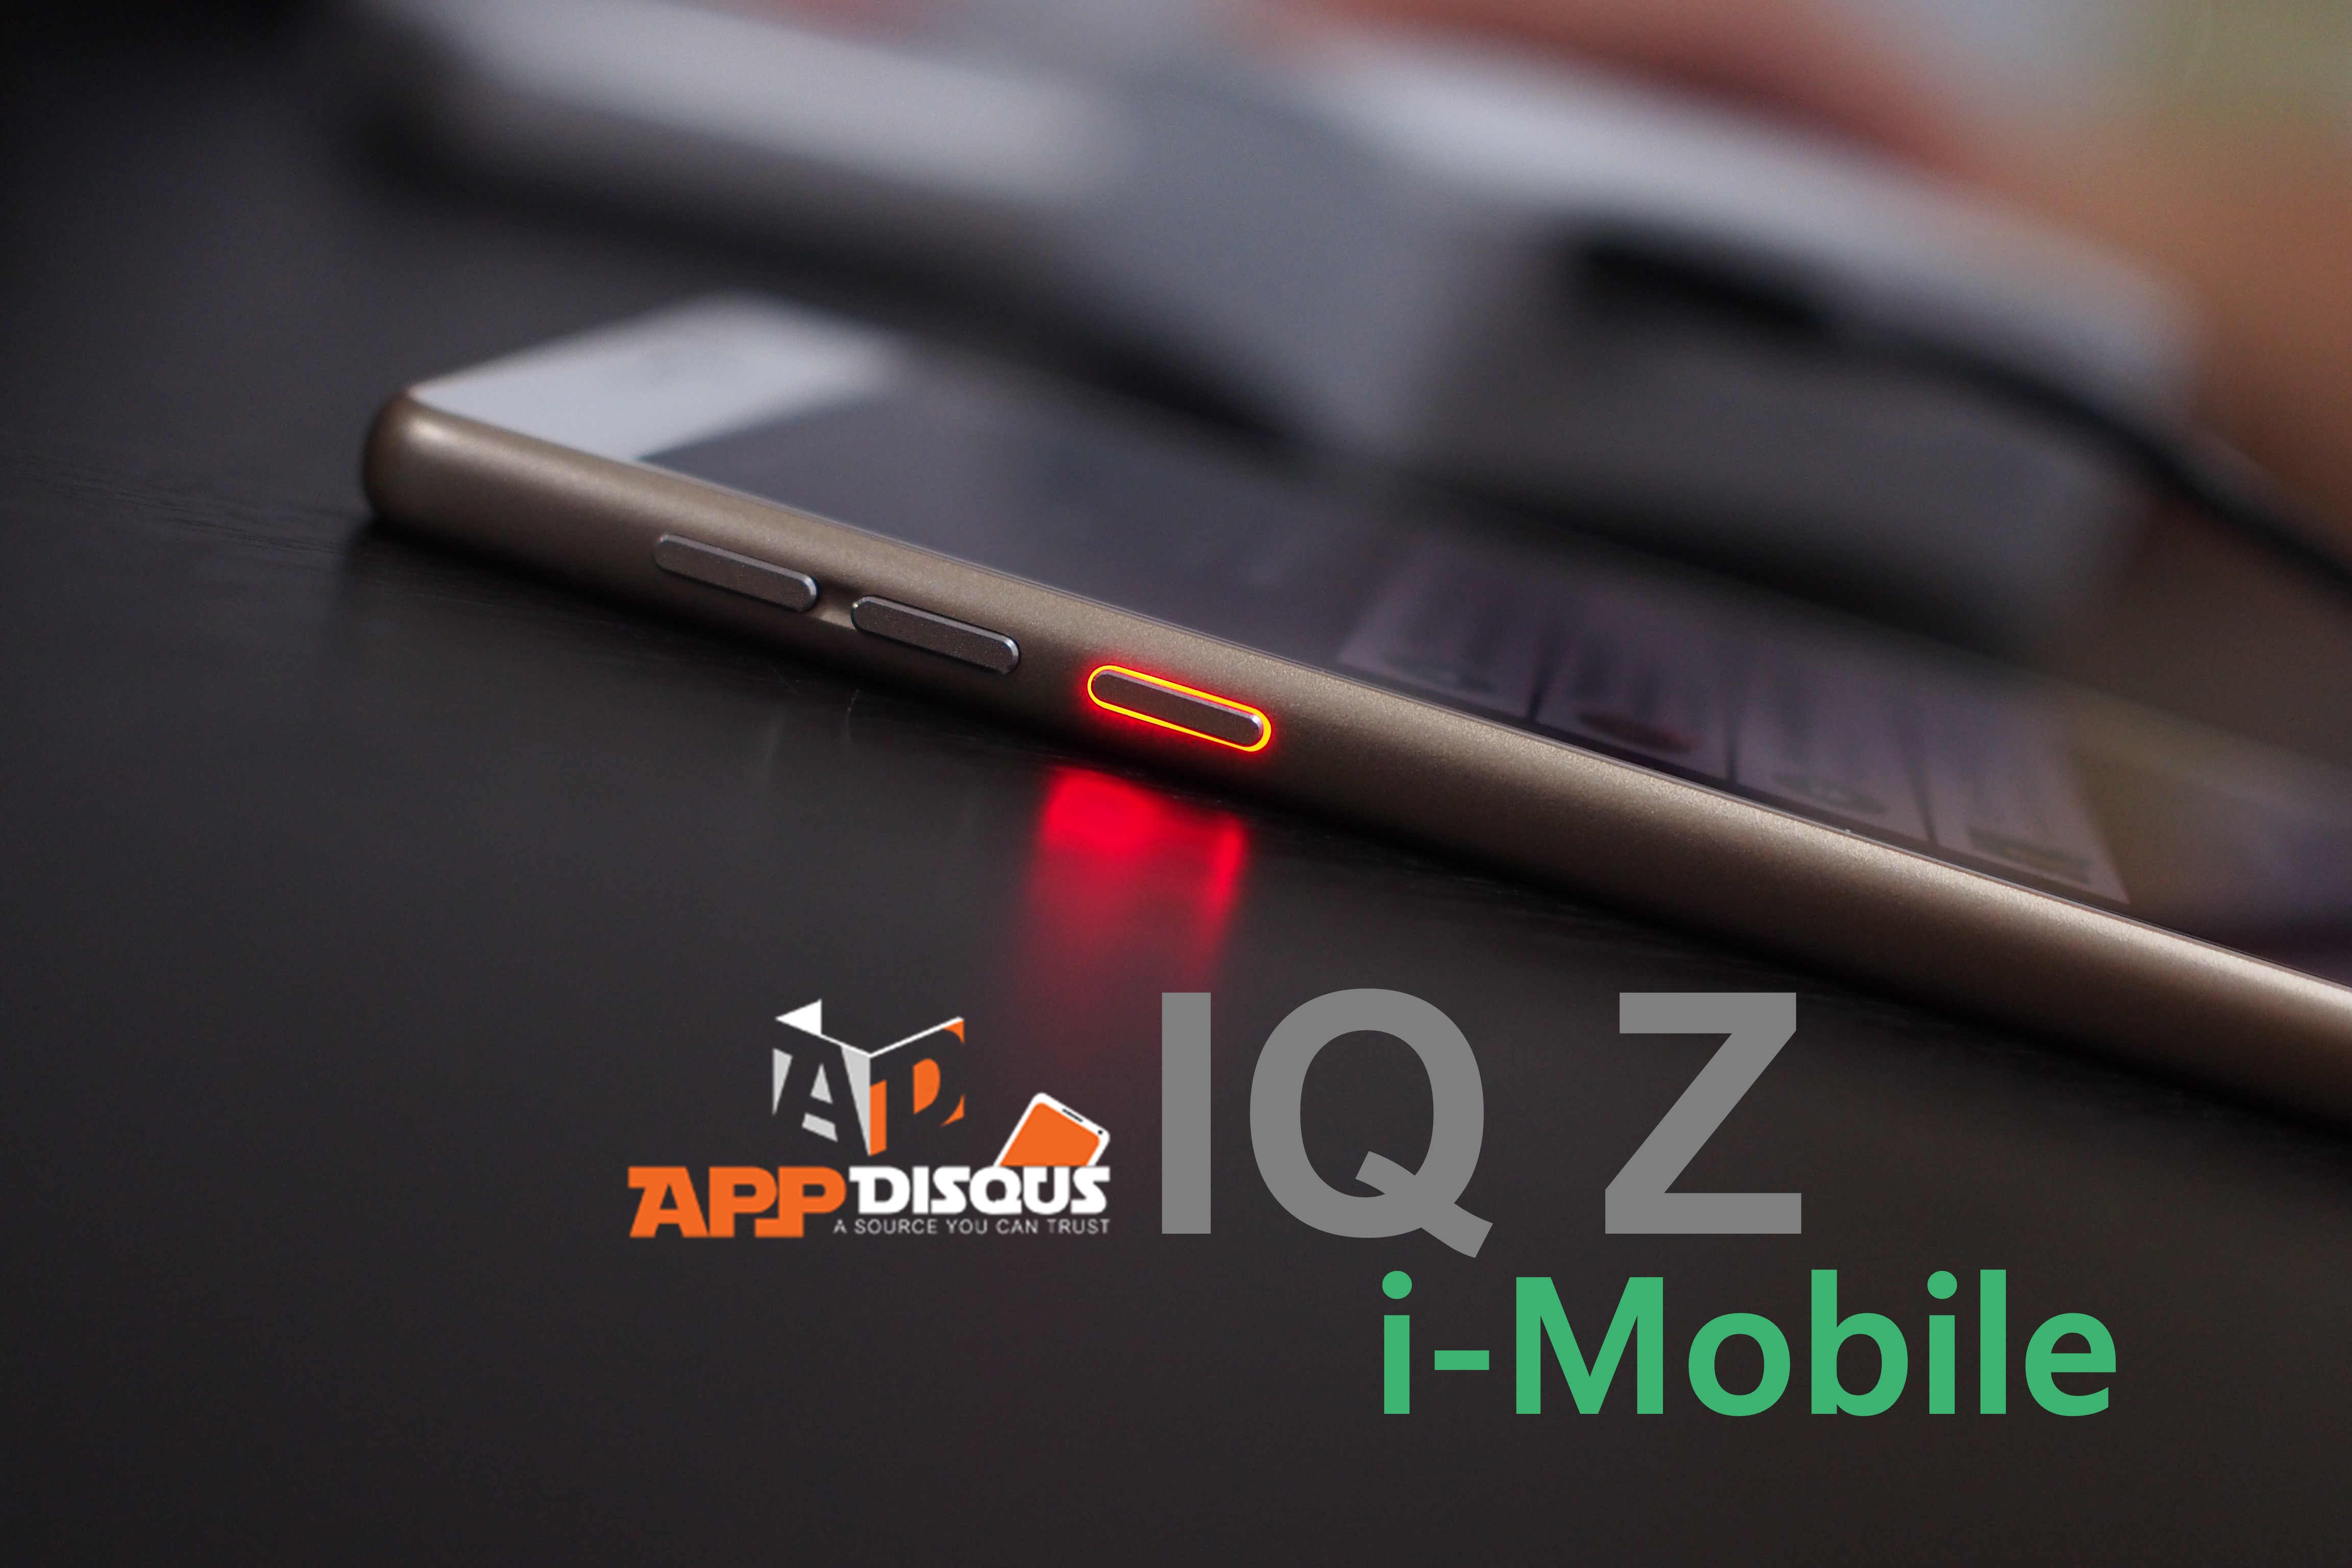 P72411921 | Android L | รีวิว i-Mobile IQ Z แอนดรอยด์ แรงเพียงพอ ในราคาพอเพียง 6,990บาท FullHD กับ แรม2GB และรองรับ 4G